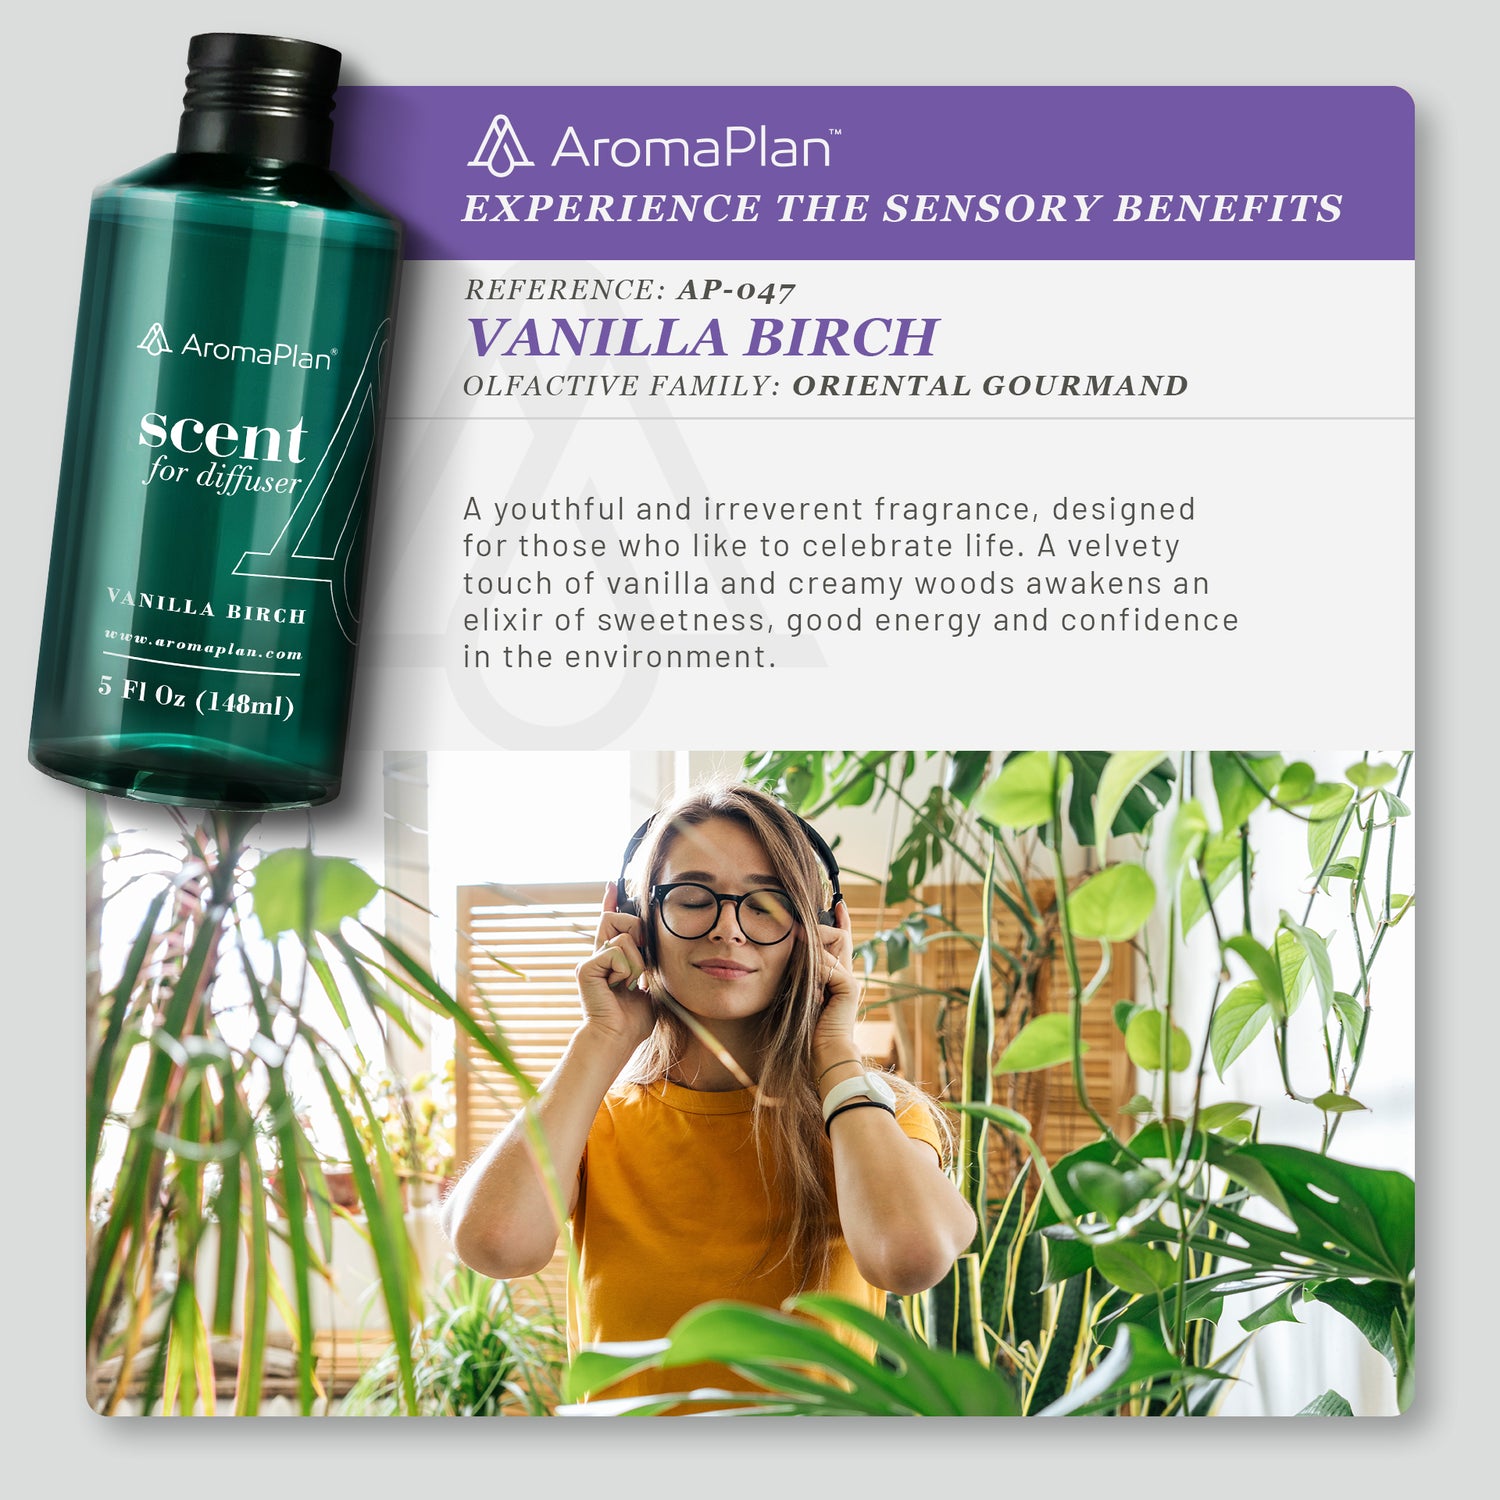 Vanilla Hazelnut Home Fragrance Diffuser Oils Uncut .5 1/2oz 